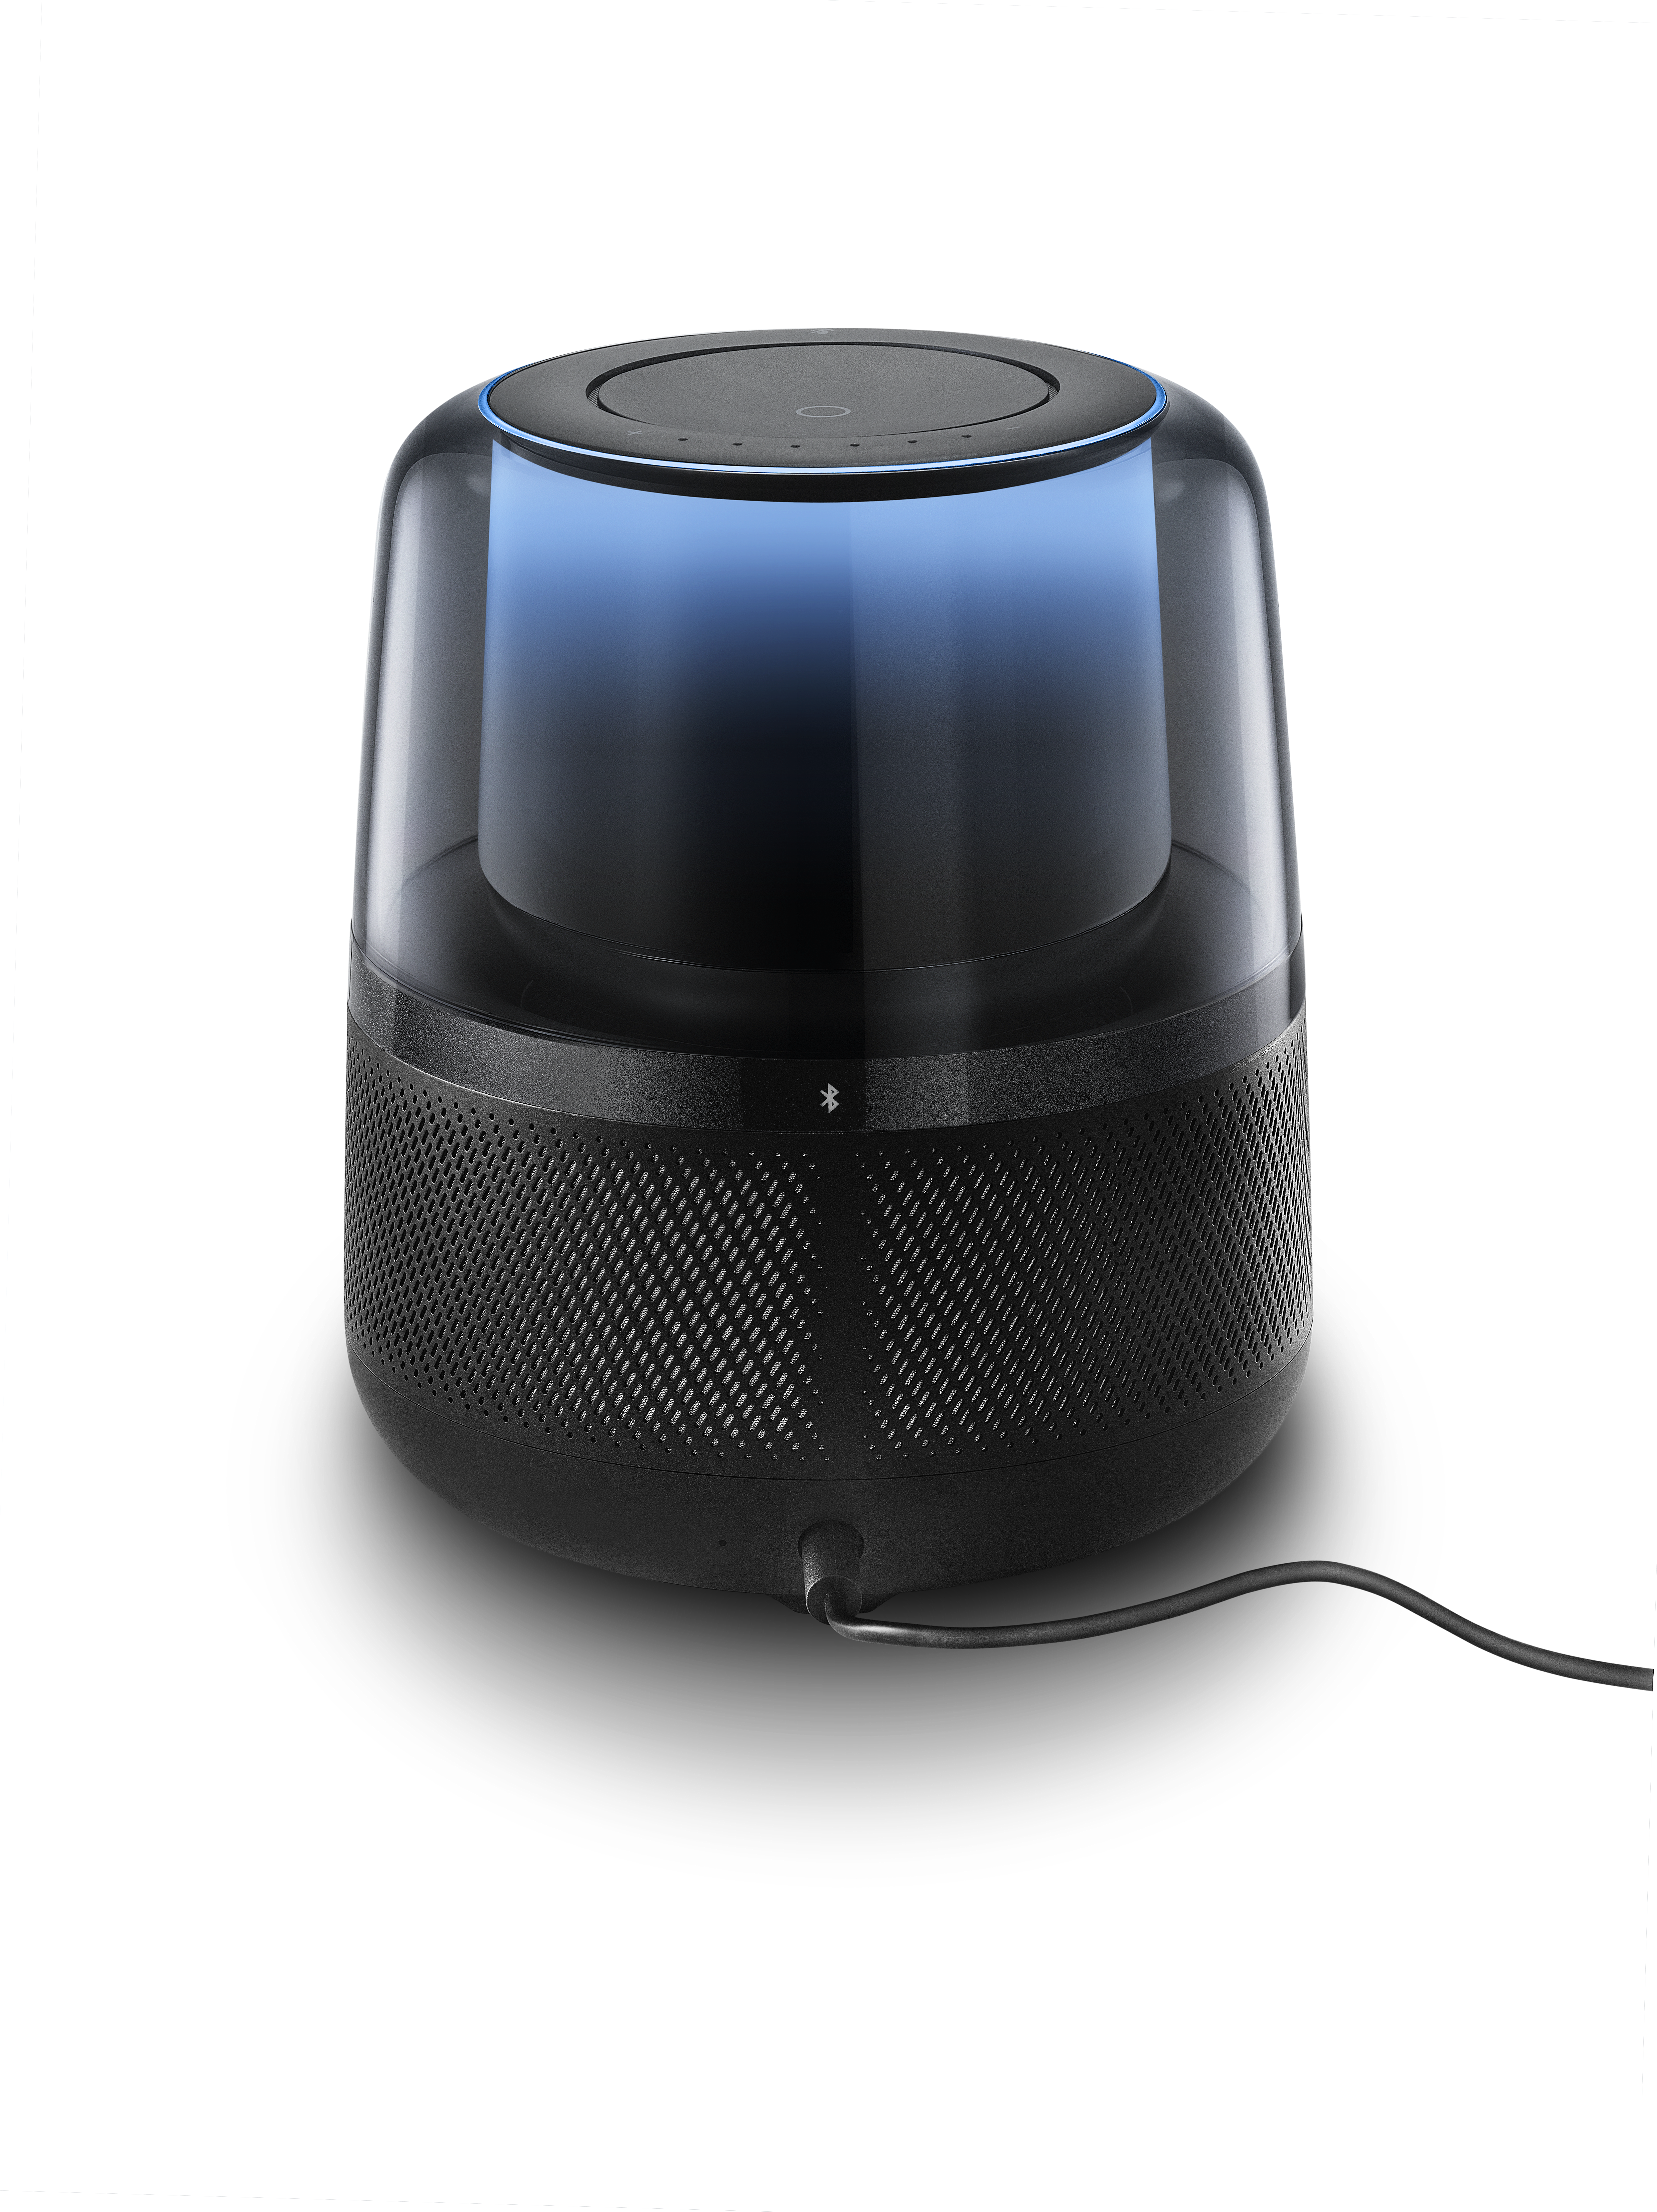 KARDON Schwarz Voice-Activated HARMAN Bluetooth Alexa Lautsprecher,